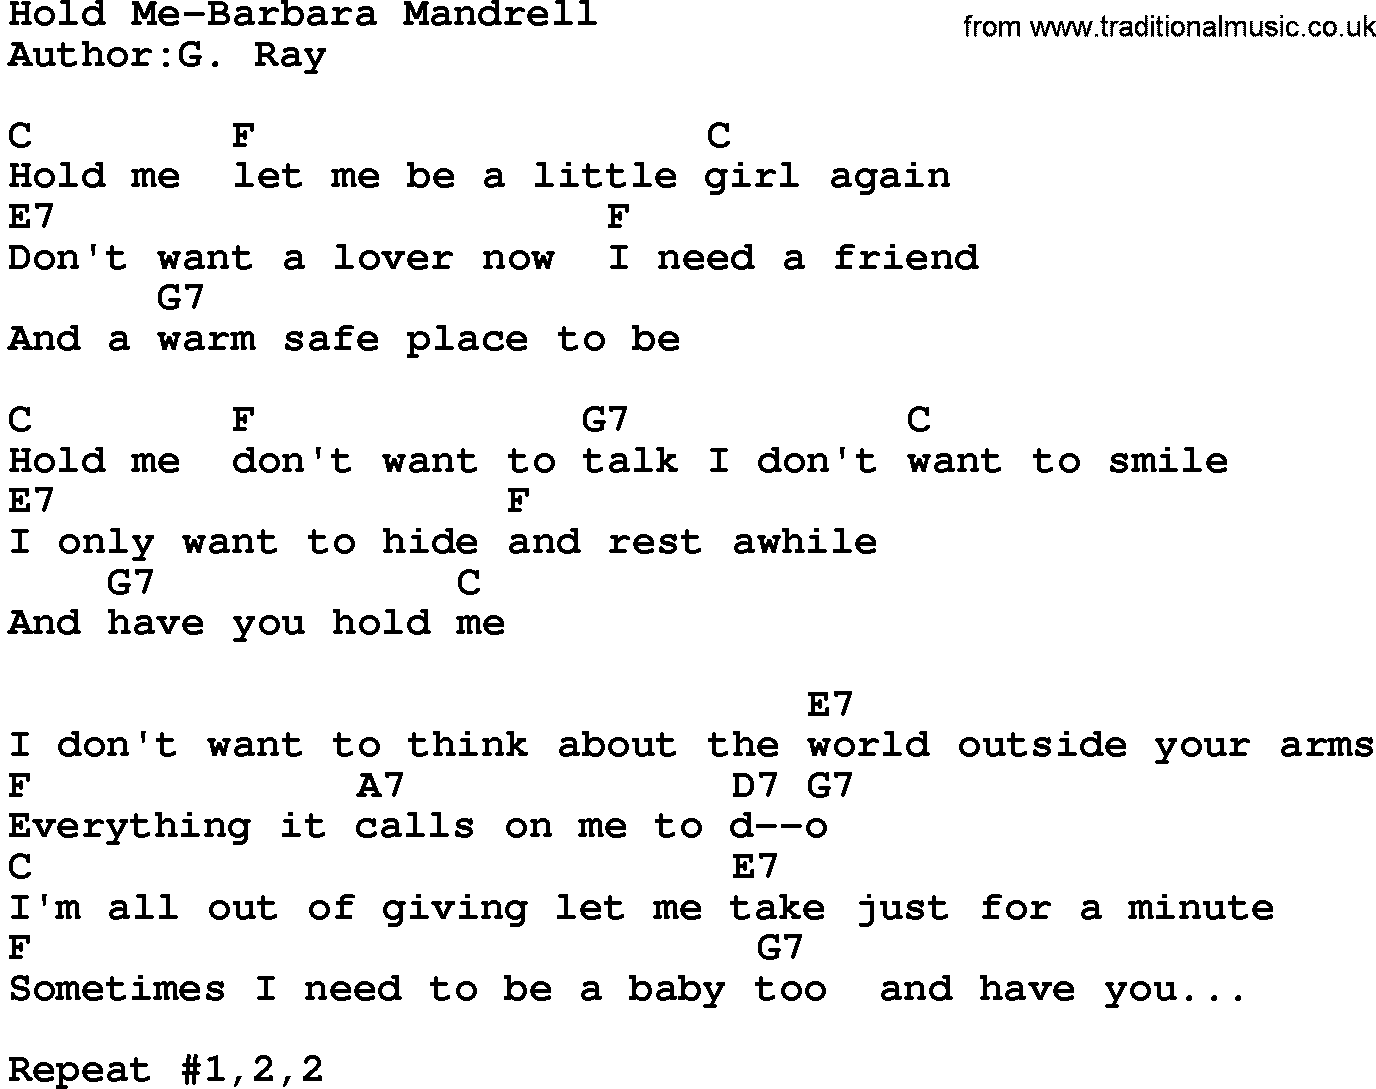 Country music song: Hold Me-Barbara Mandrell lyrics and chords